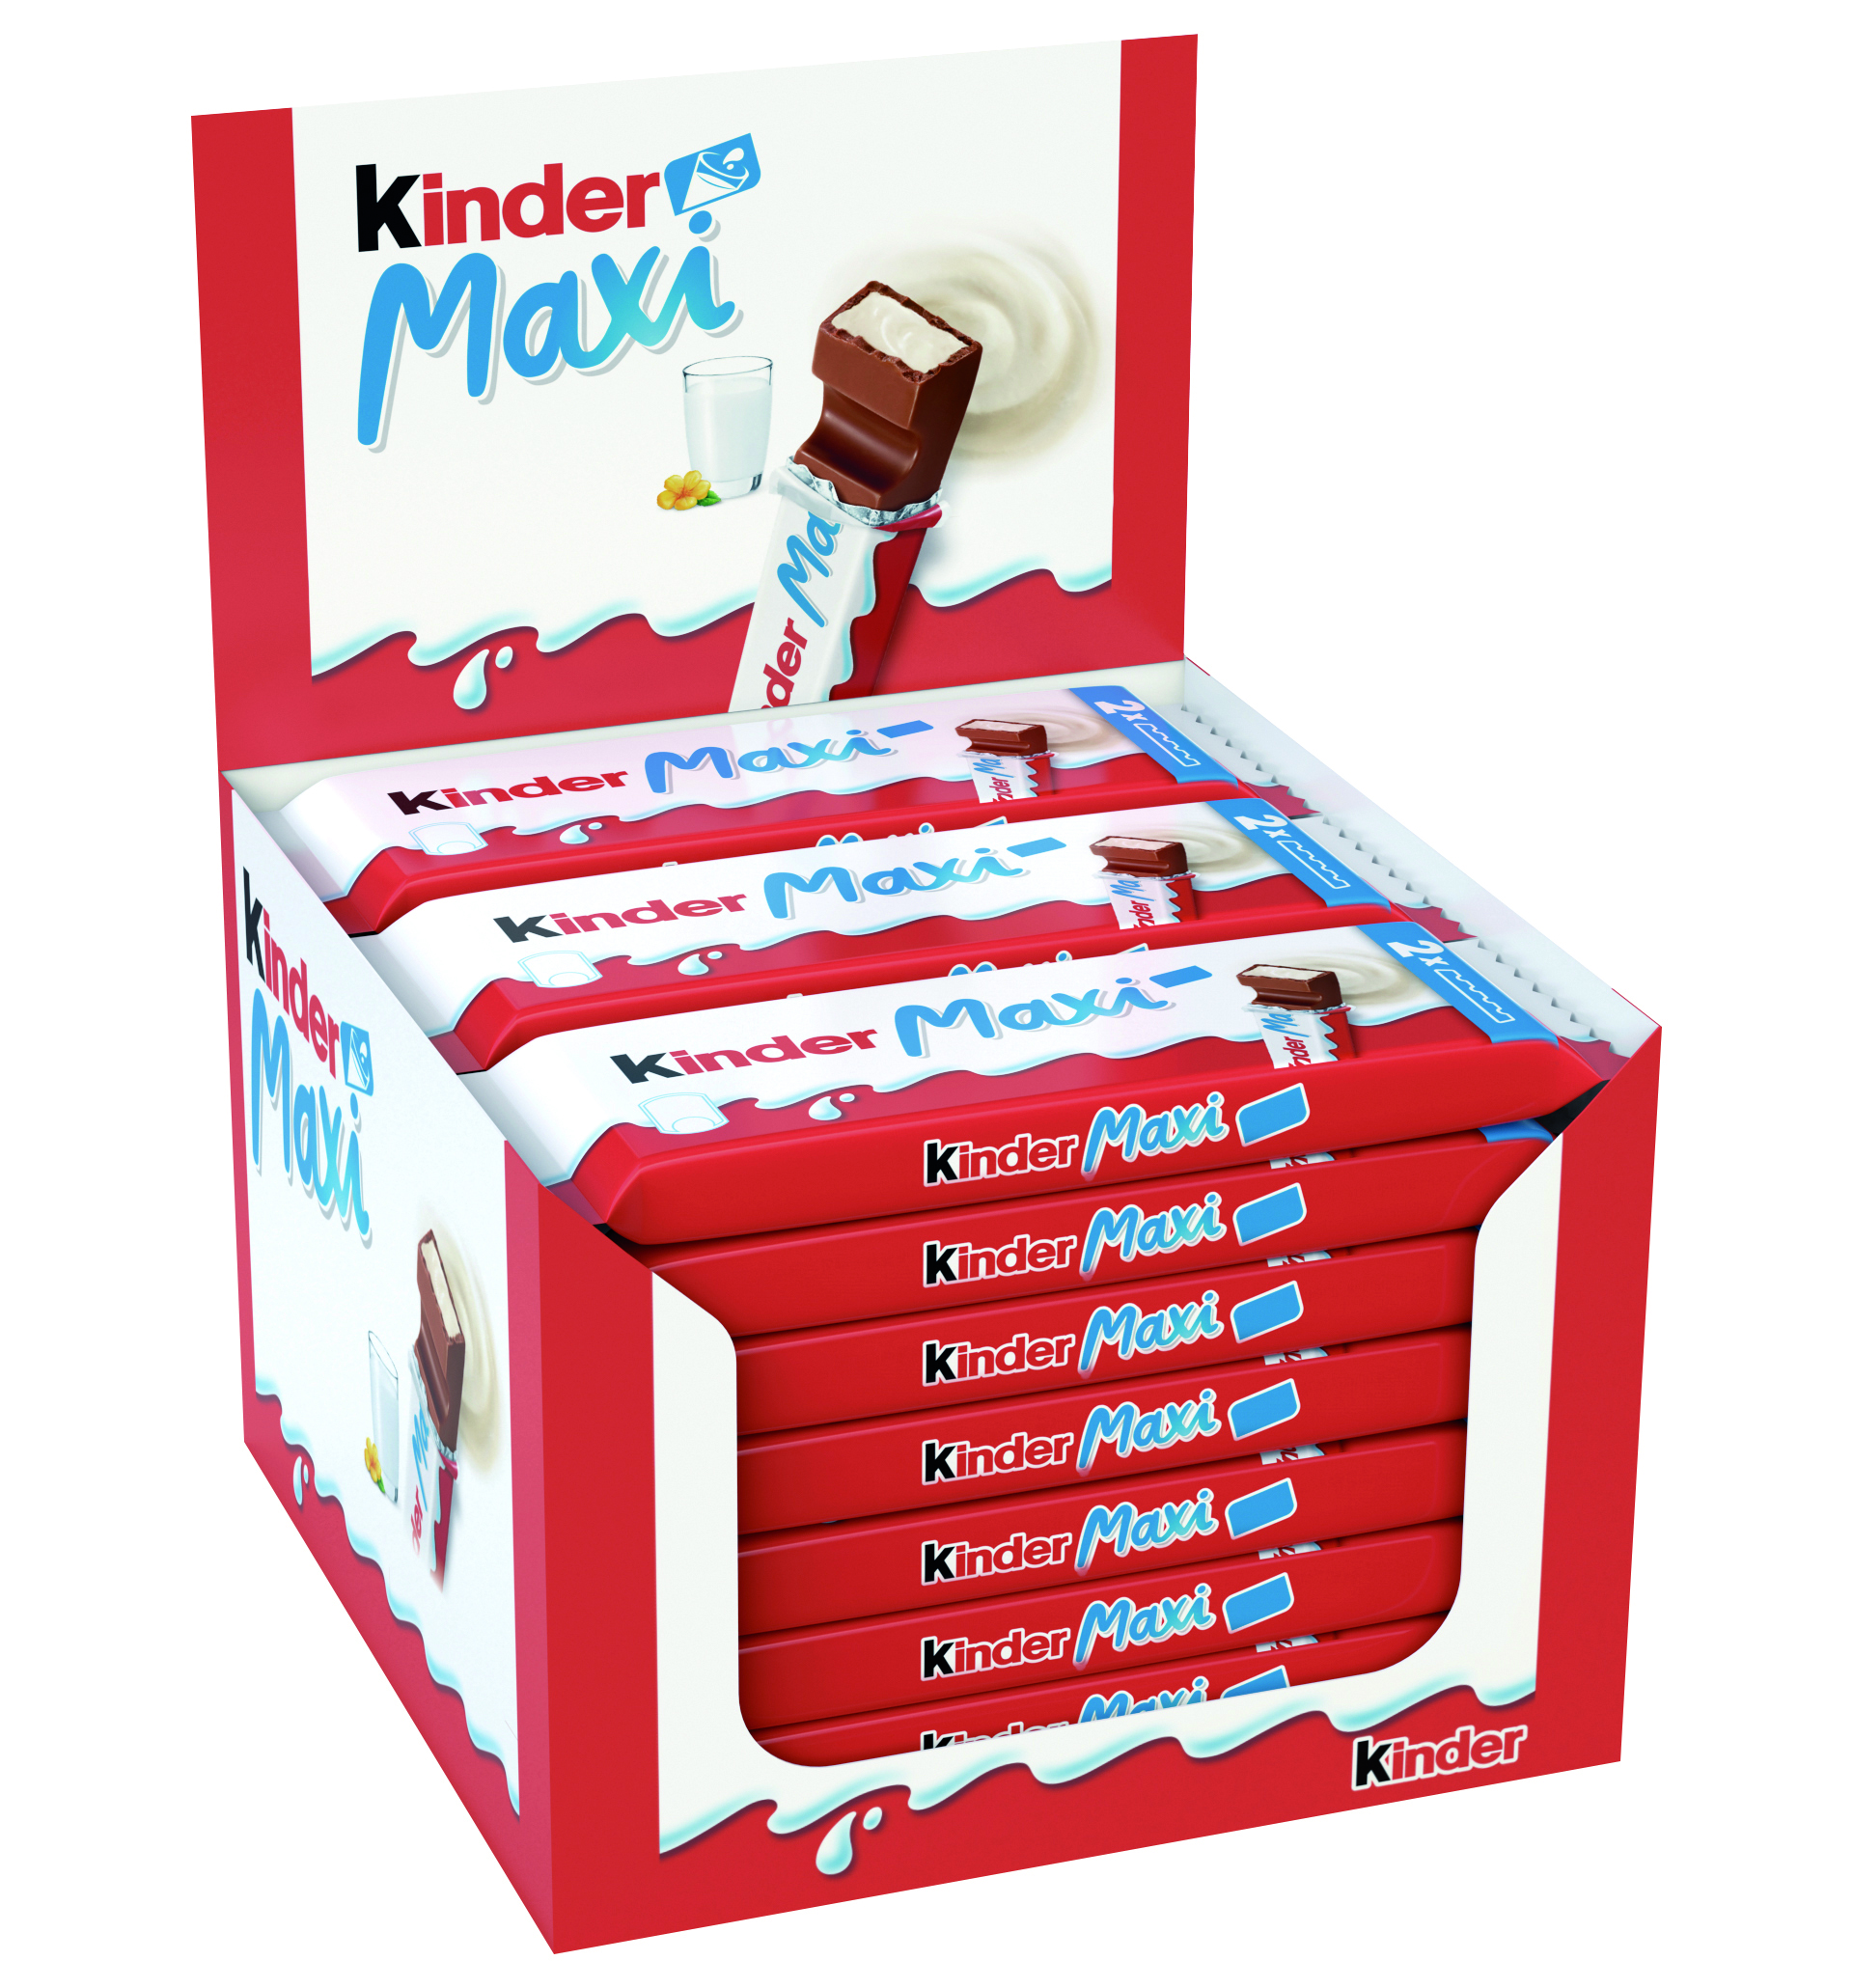 http://bonovo.almadoce.pt/fileuploads/Produtos/Chocolates/Tablets/_Kinder Maxi T2x24.jpg